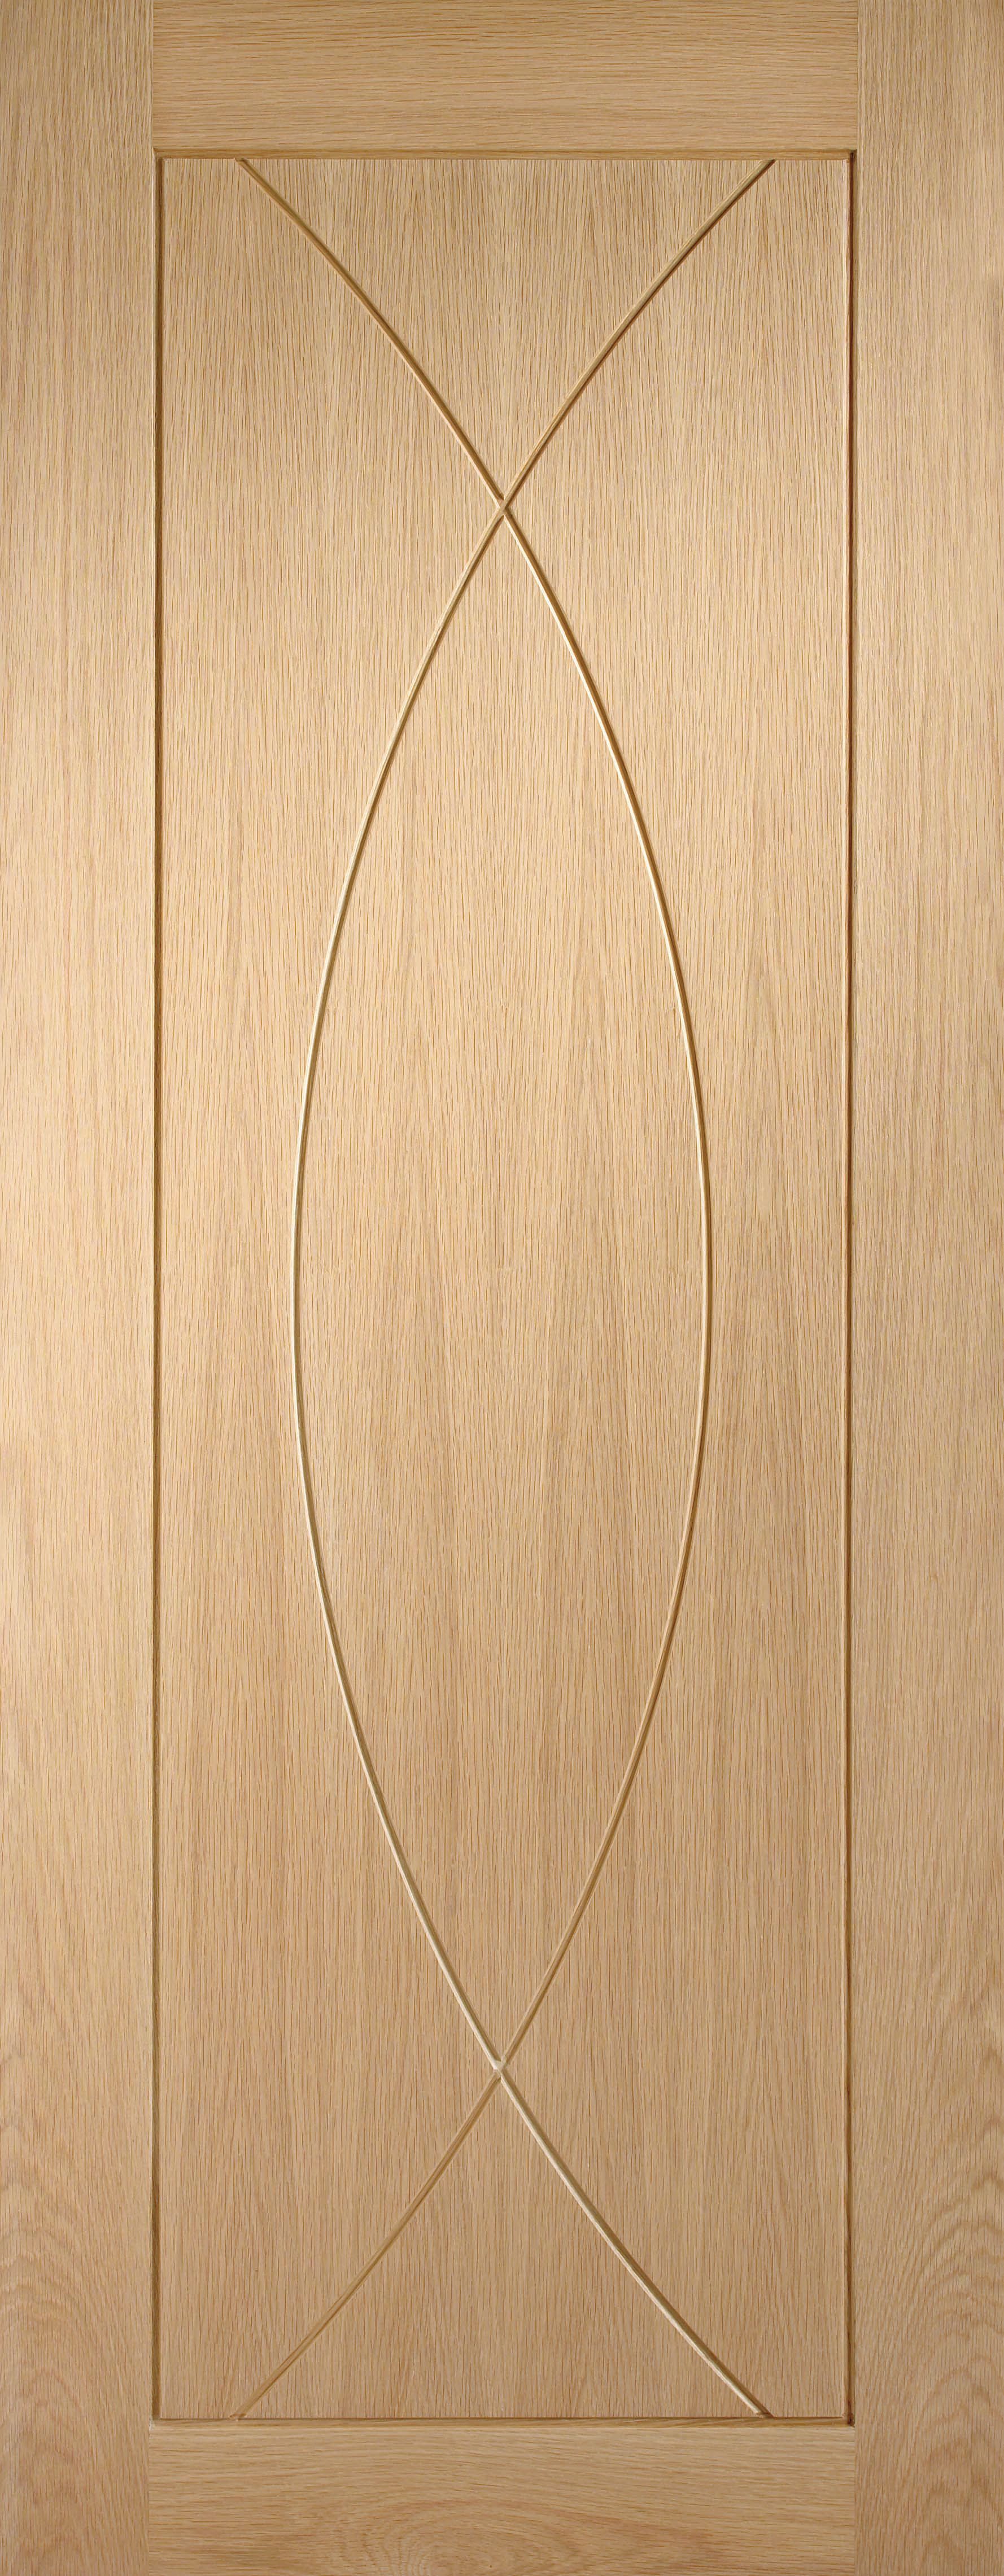 Image of XL Joinery Pesaro Oak Patterned Internal Door - 1981 x 686mm